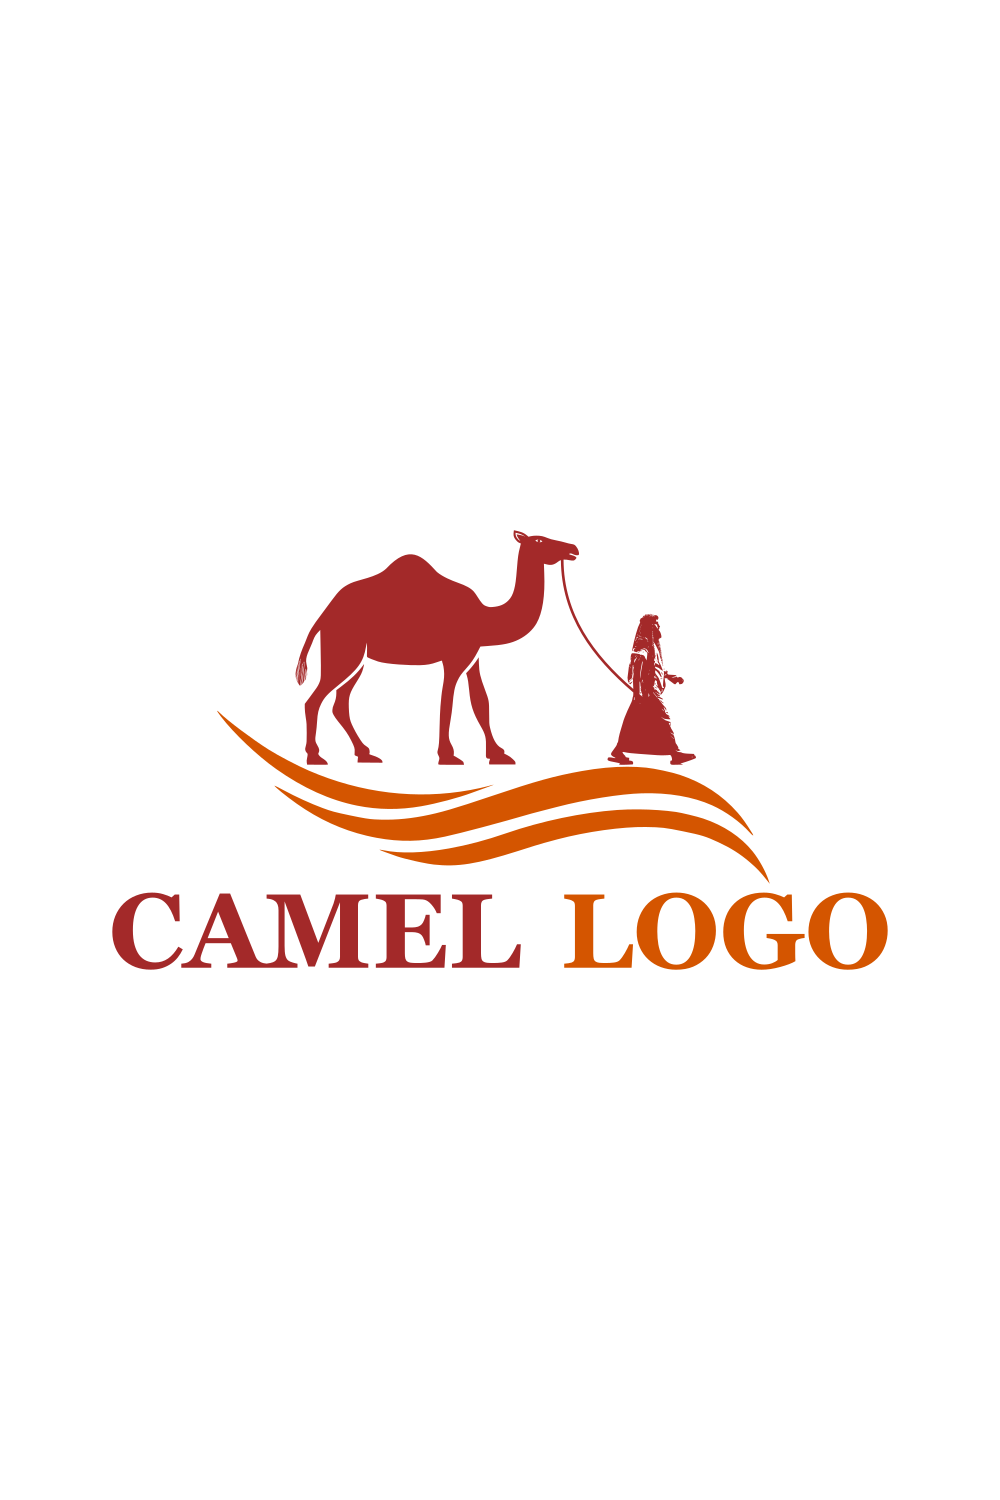 Creative Camel Logo Design Template pinterest image.